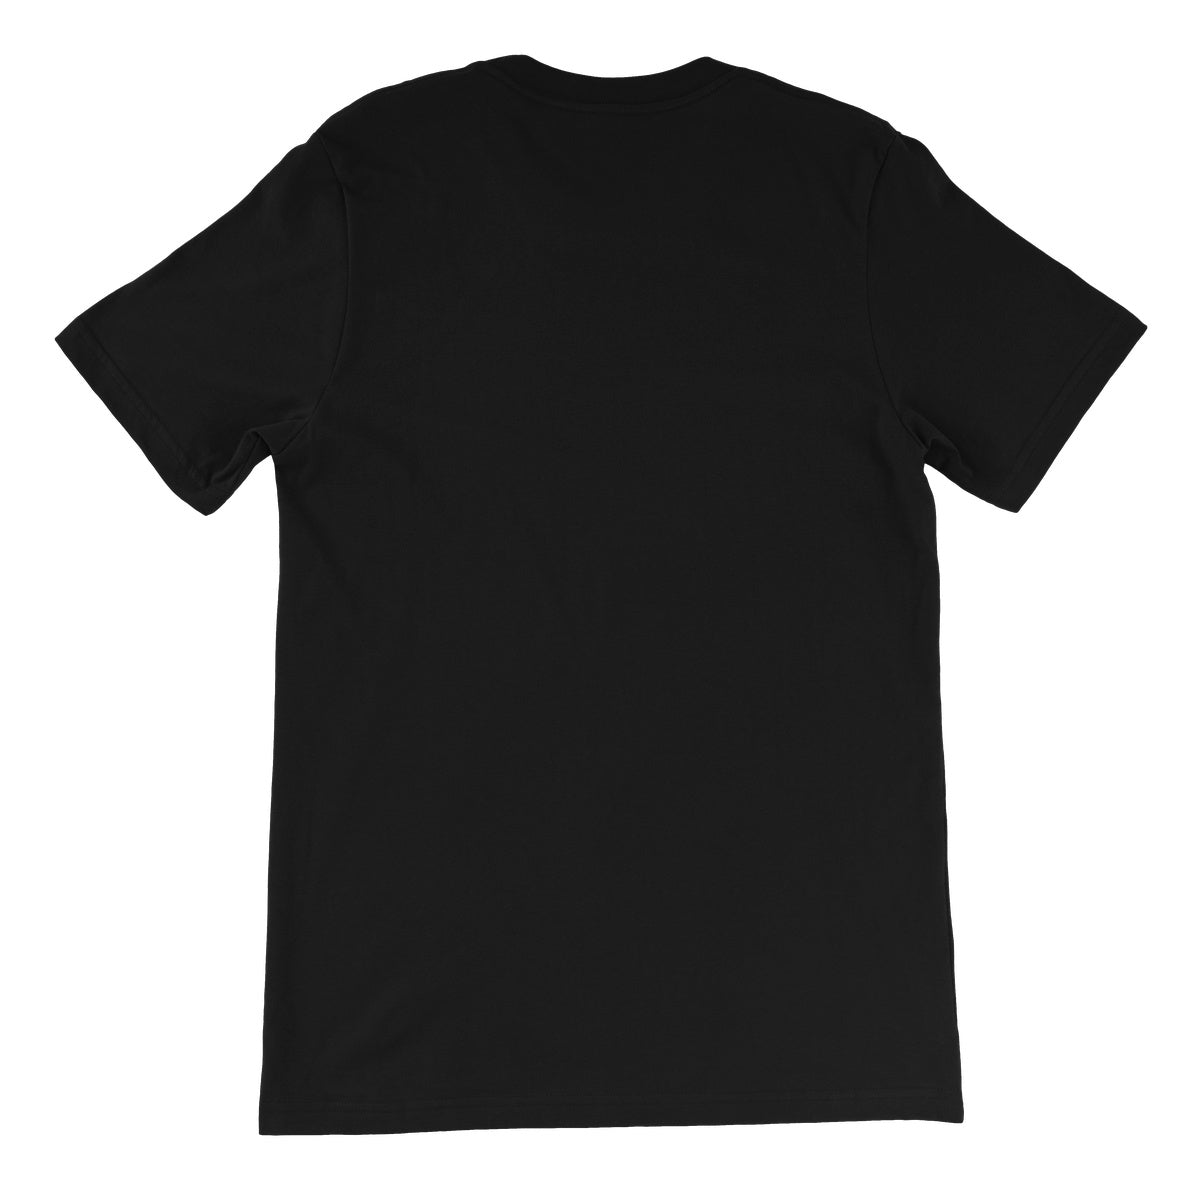 Tatanka The Native American Unisex Short Sleeve T-Shirt